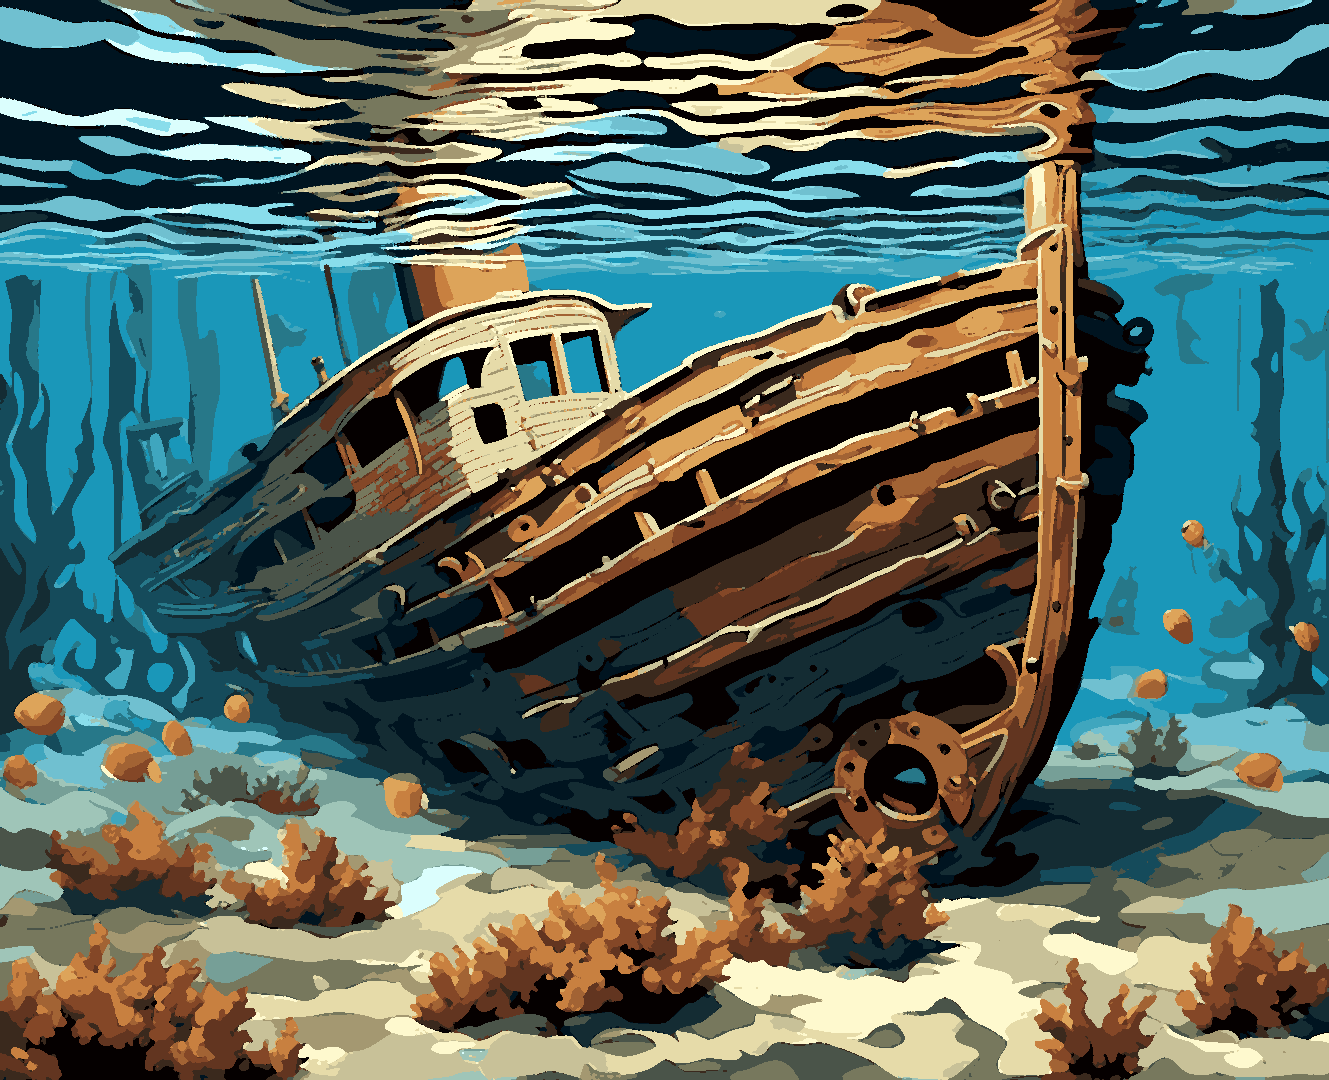 Sunken Shipwreck (4) - Van-Go Paint-By-Number Kit